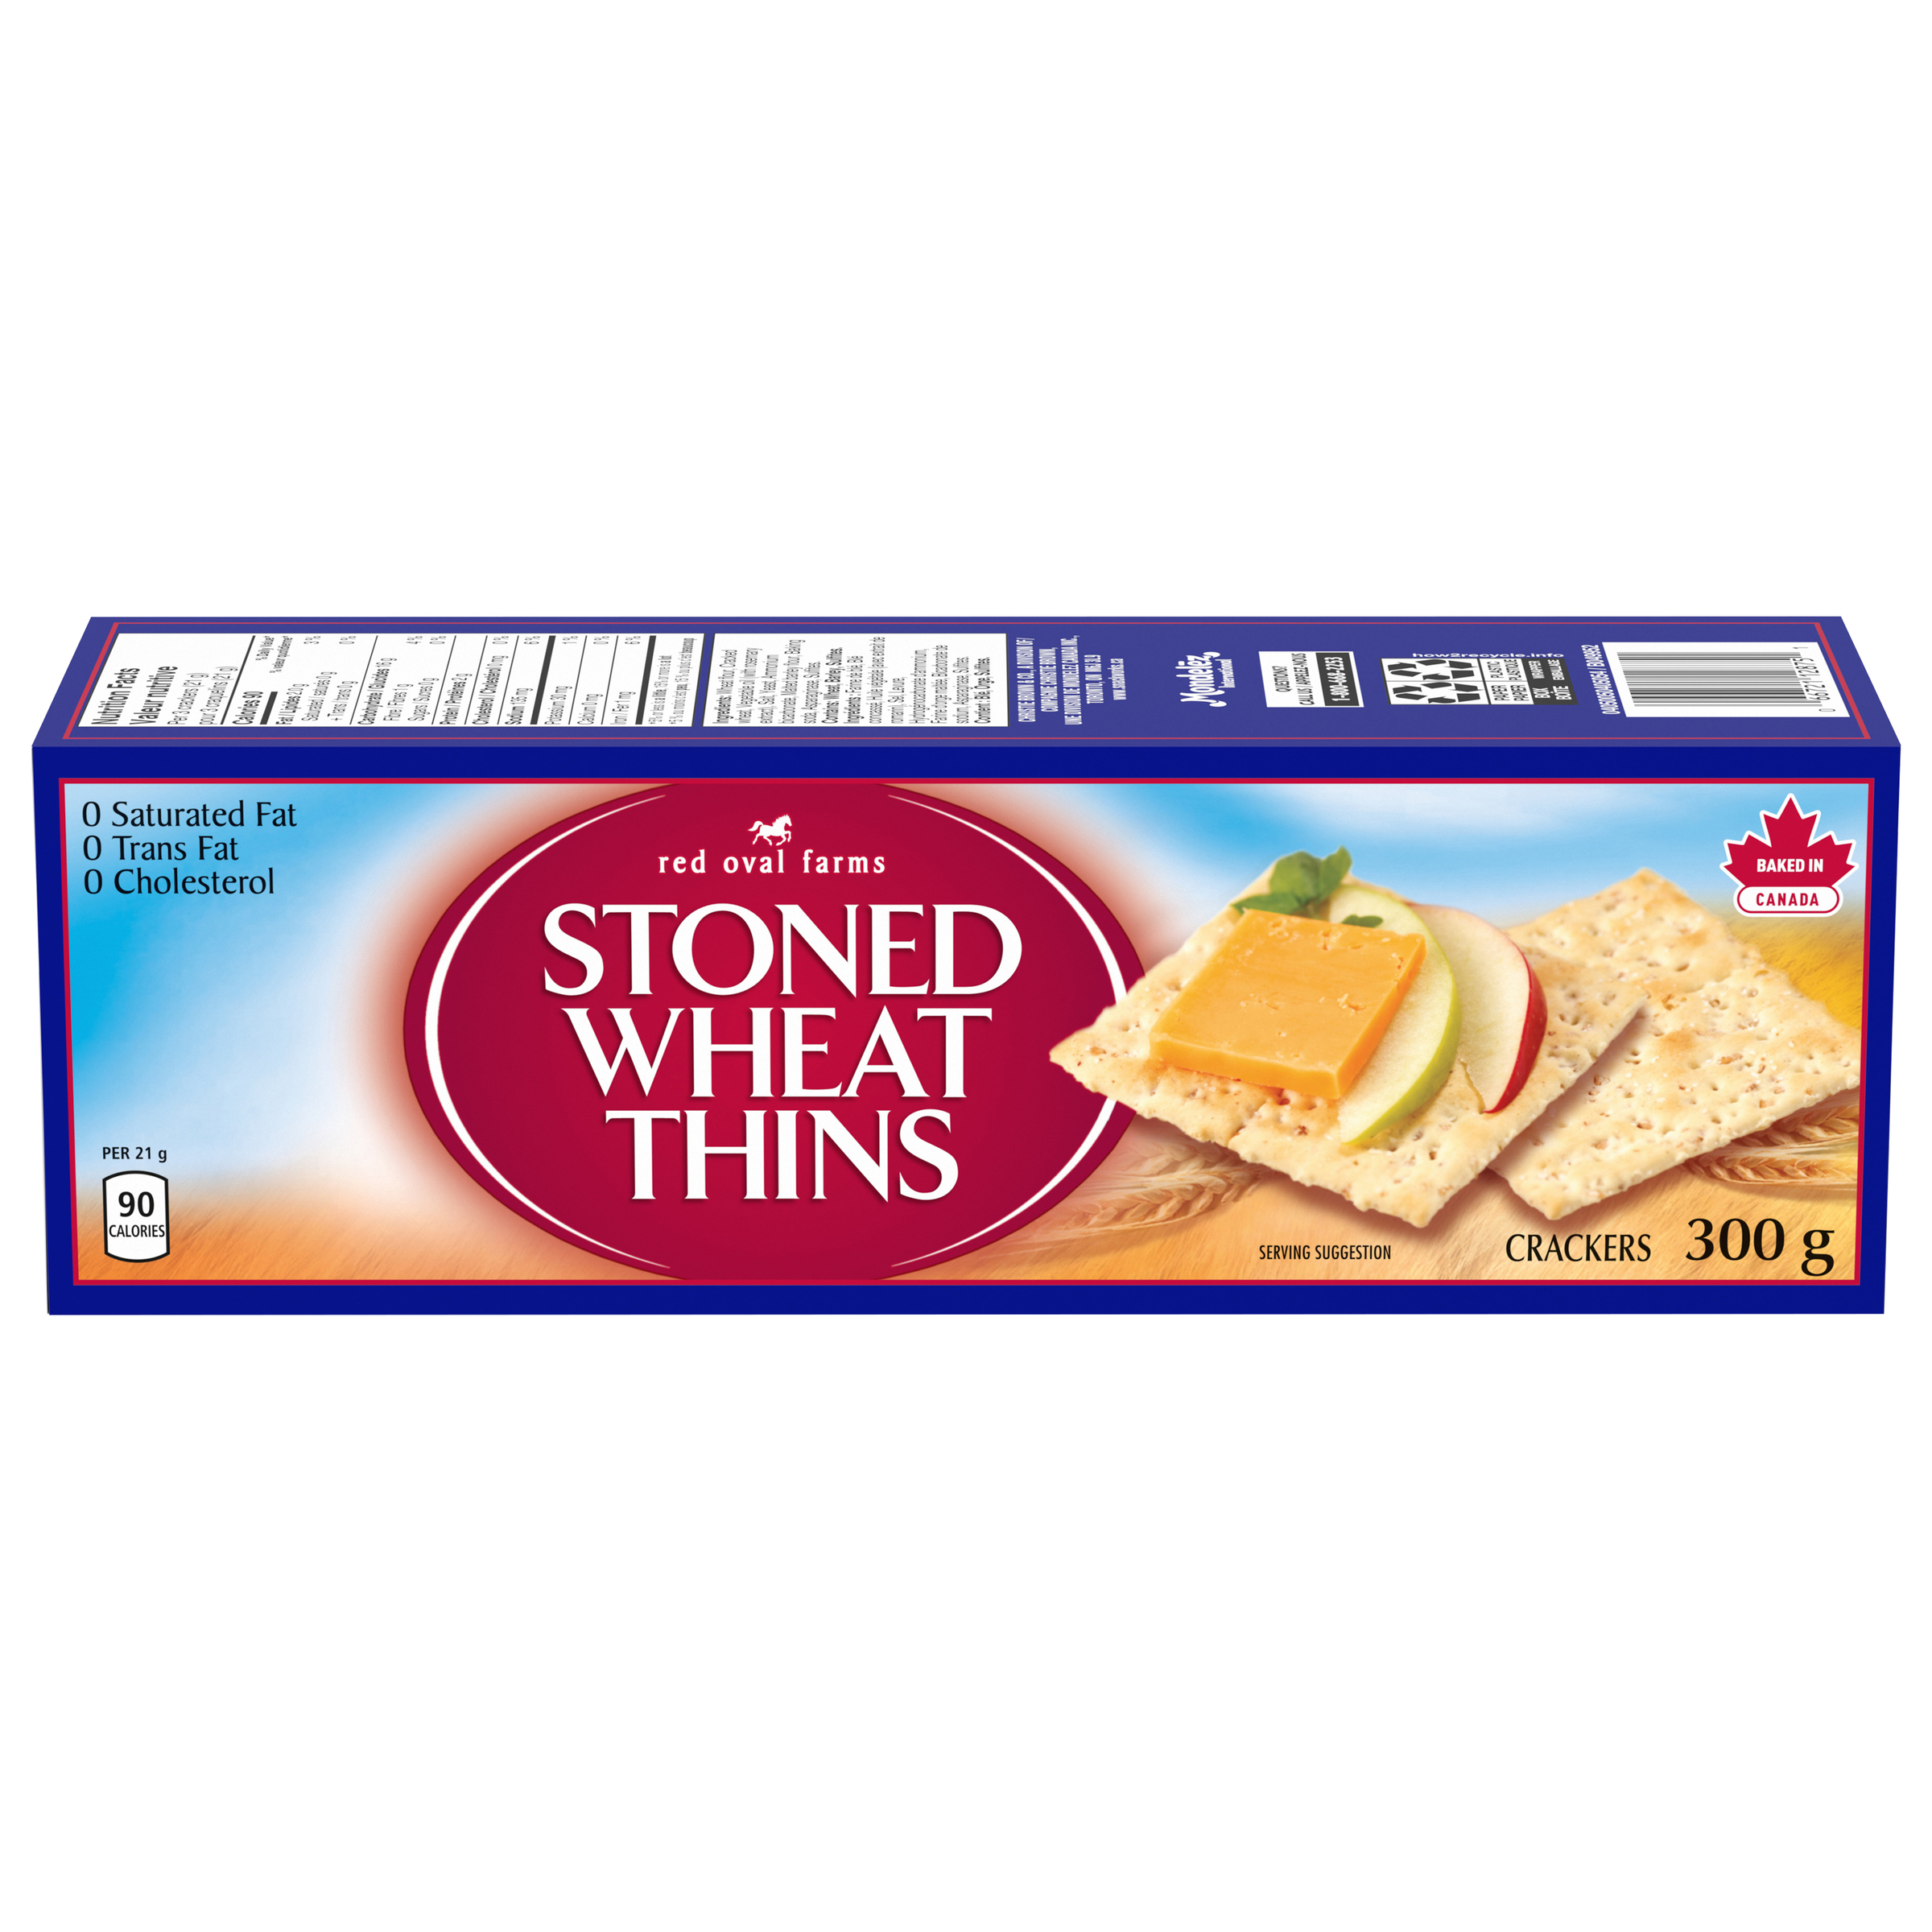 STONED WHEAT THINS Original Crackers, 300 g